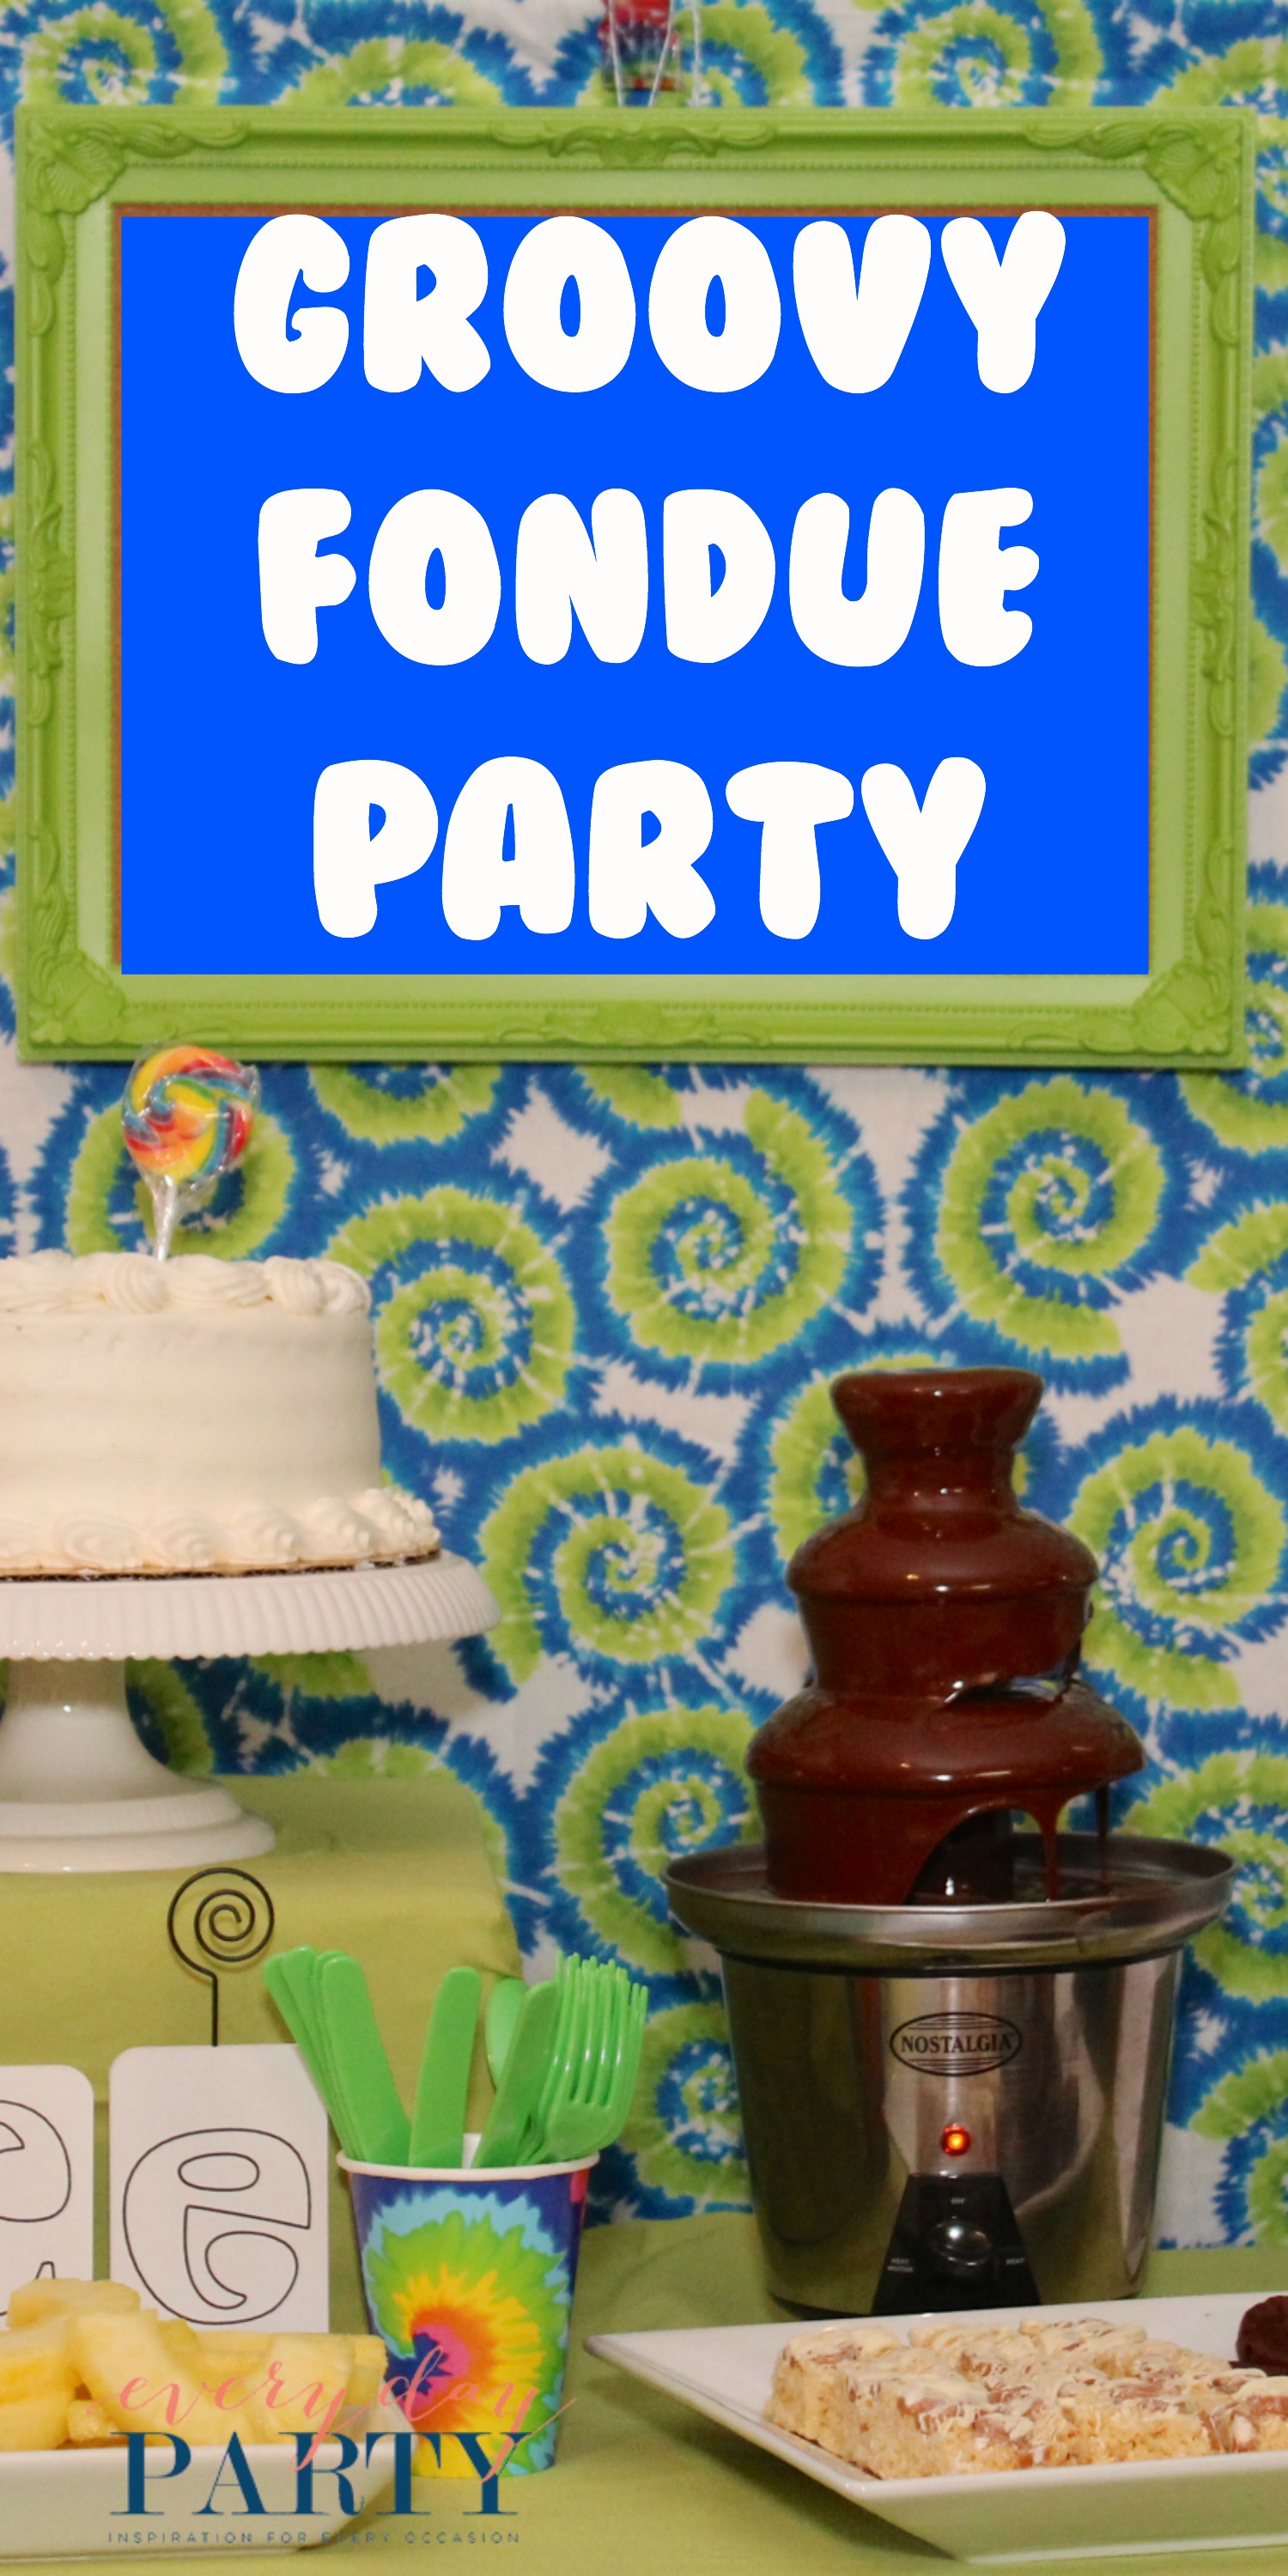 Everyday Party Magazine Groovy Fondue Party 